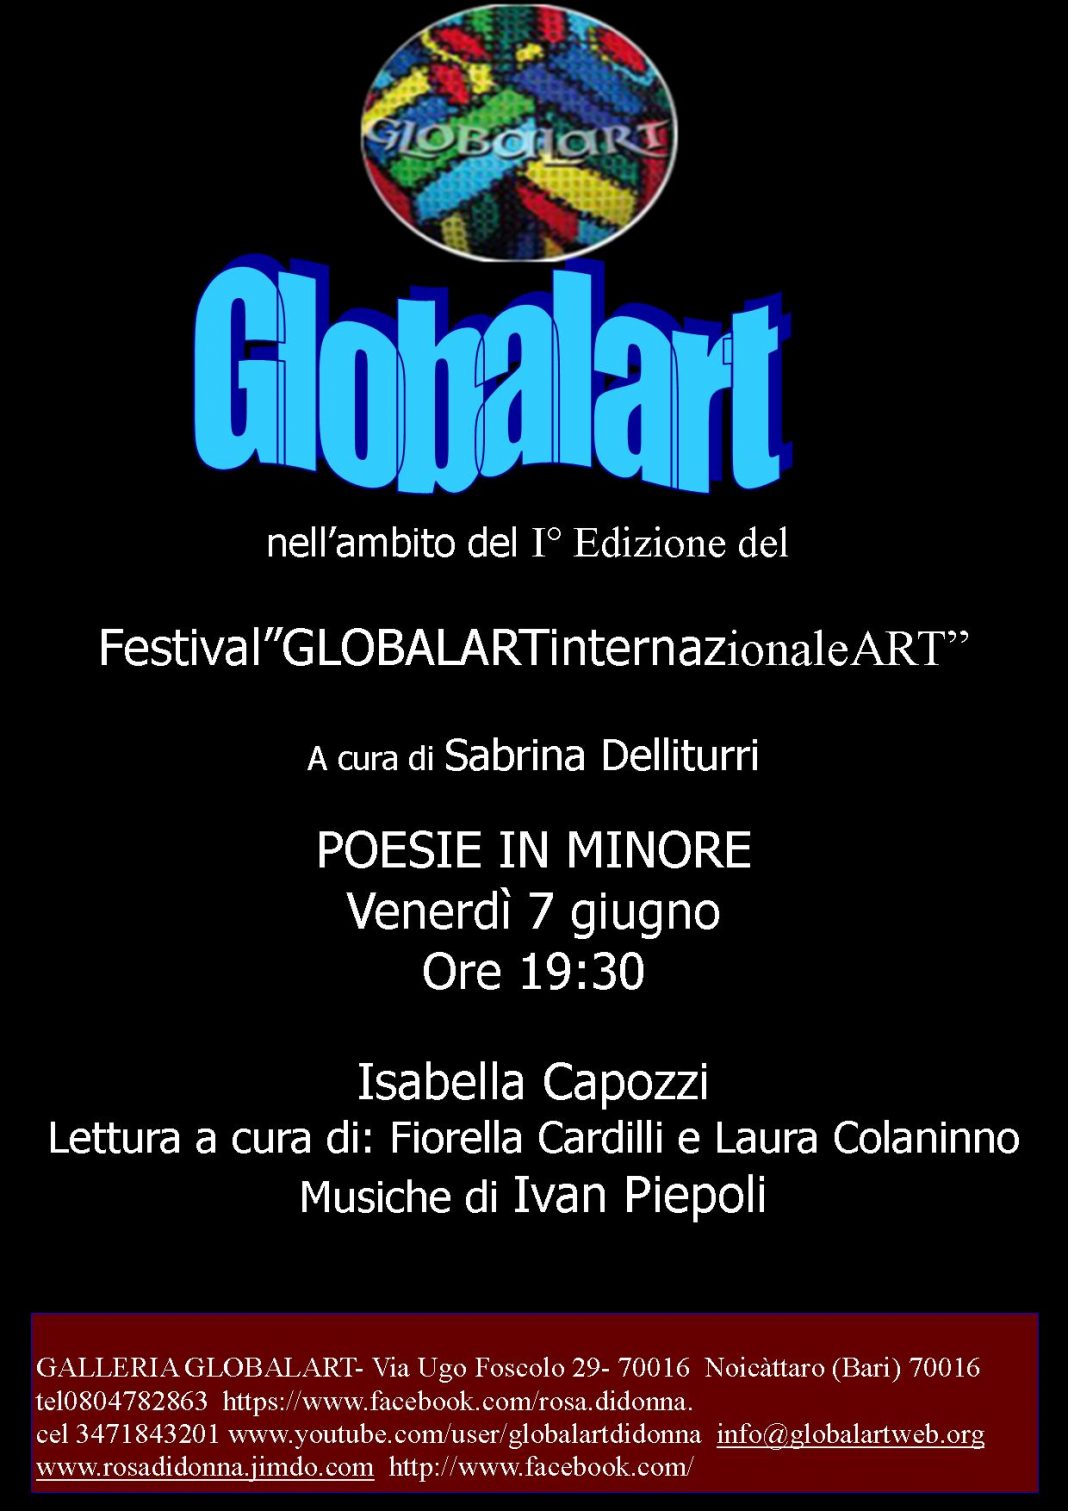 Isabella Capozzi – Poesie in minorehttps://www.exibart.com/repository/media/eventi/2013/06/isabella-capozzi-8211-poesie-in-minore-1068x1511.jpg